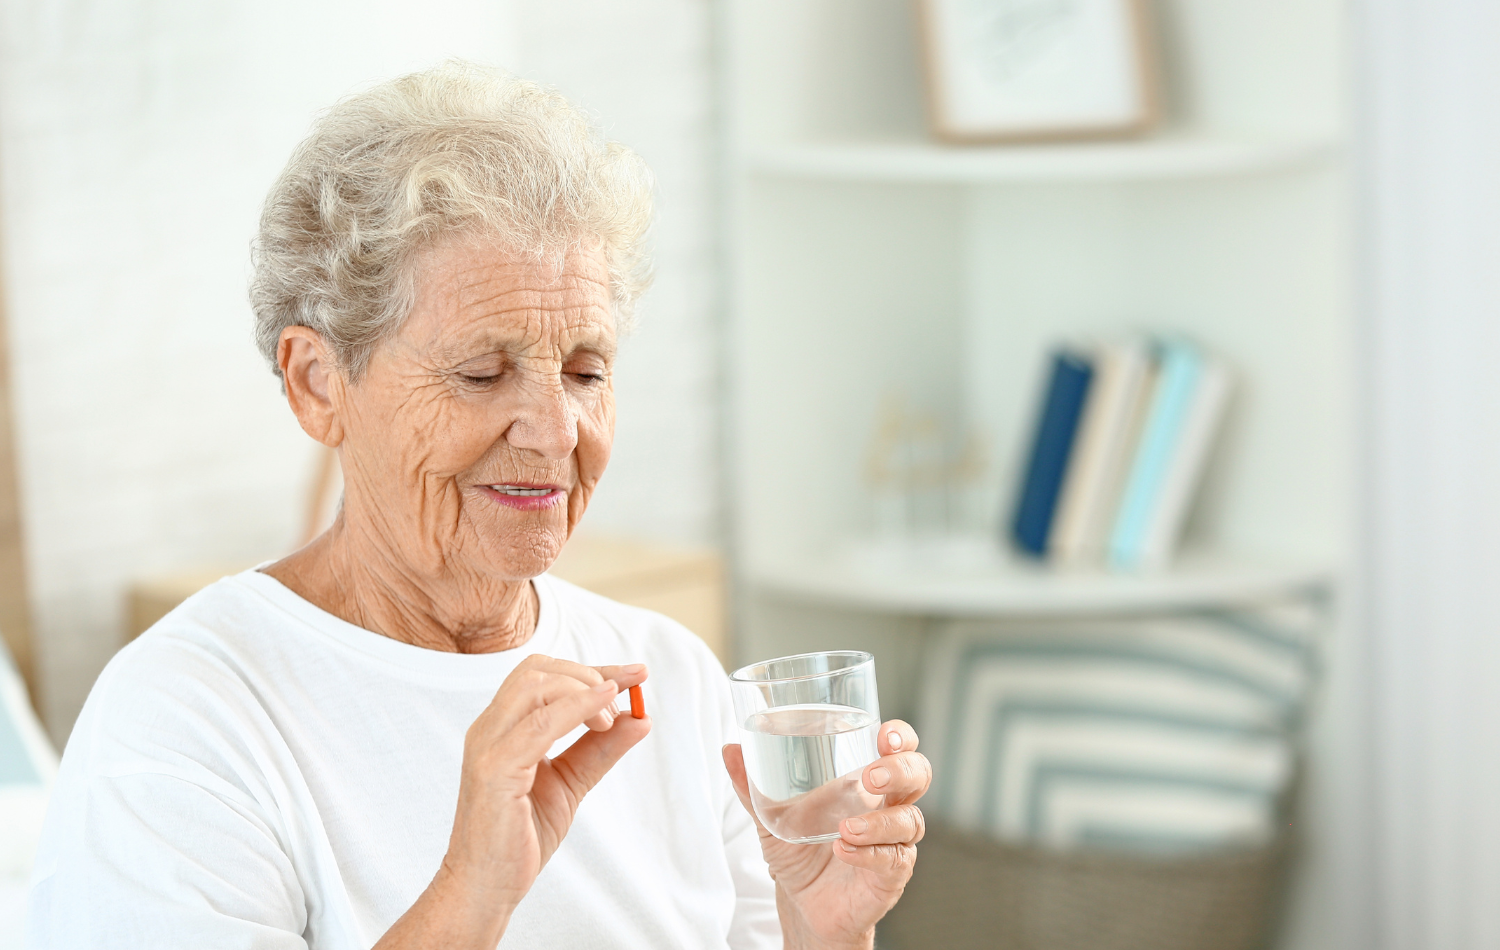 Elderly person taking a Vitamin D supplement.